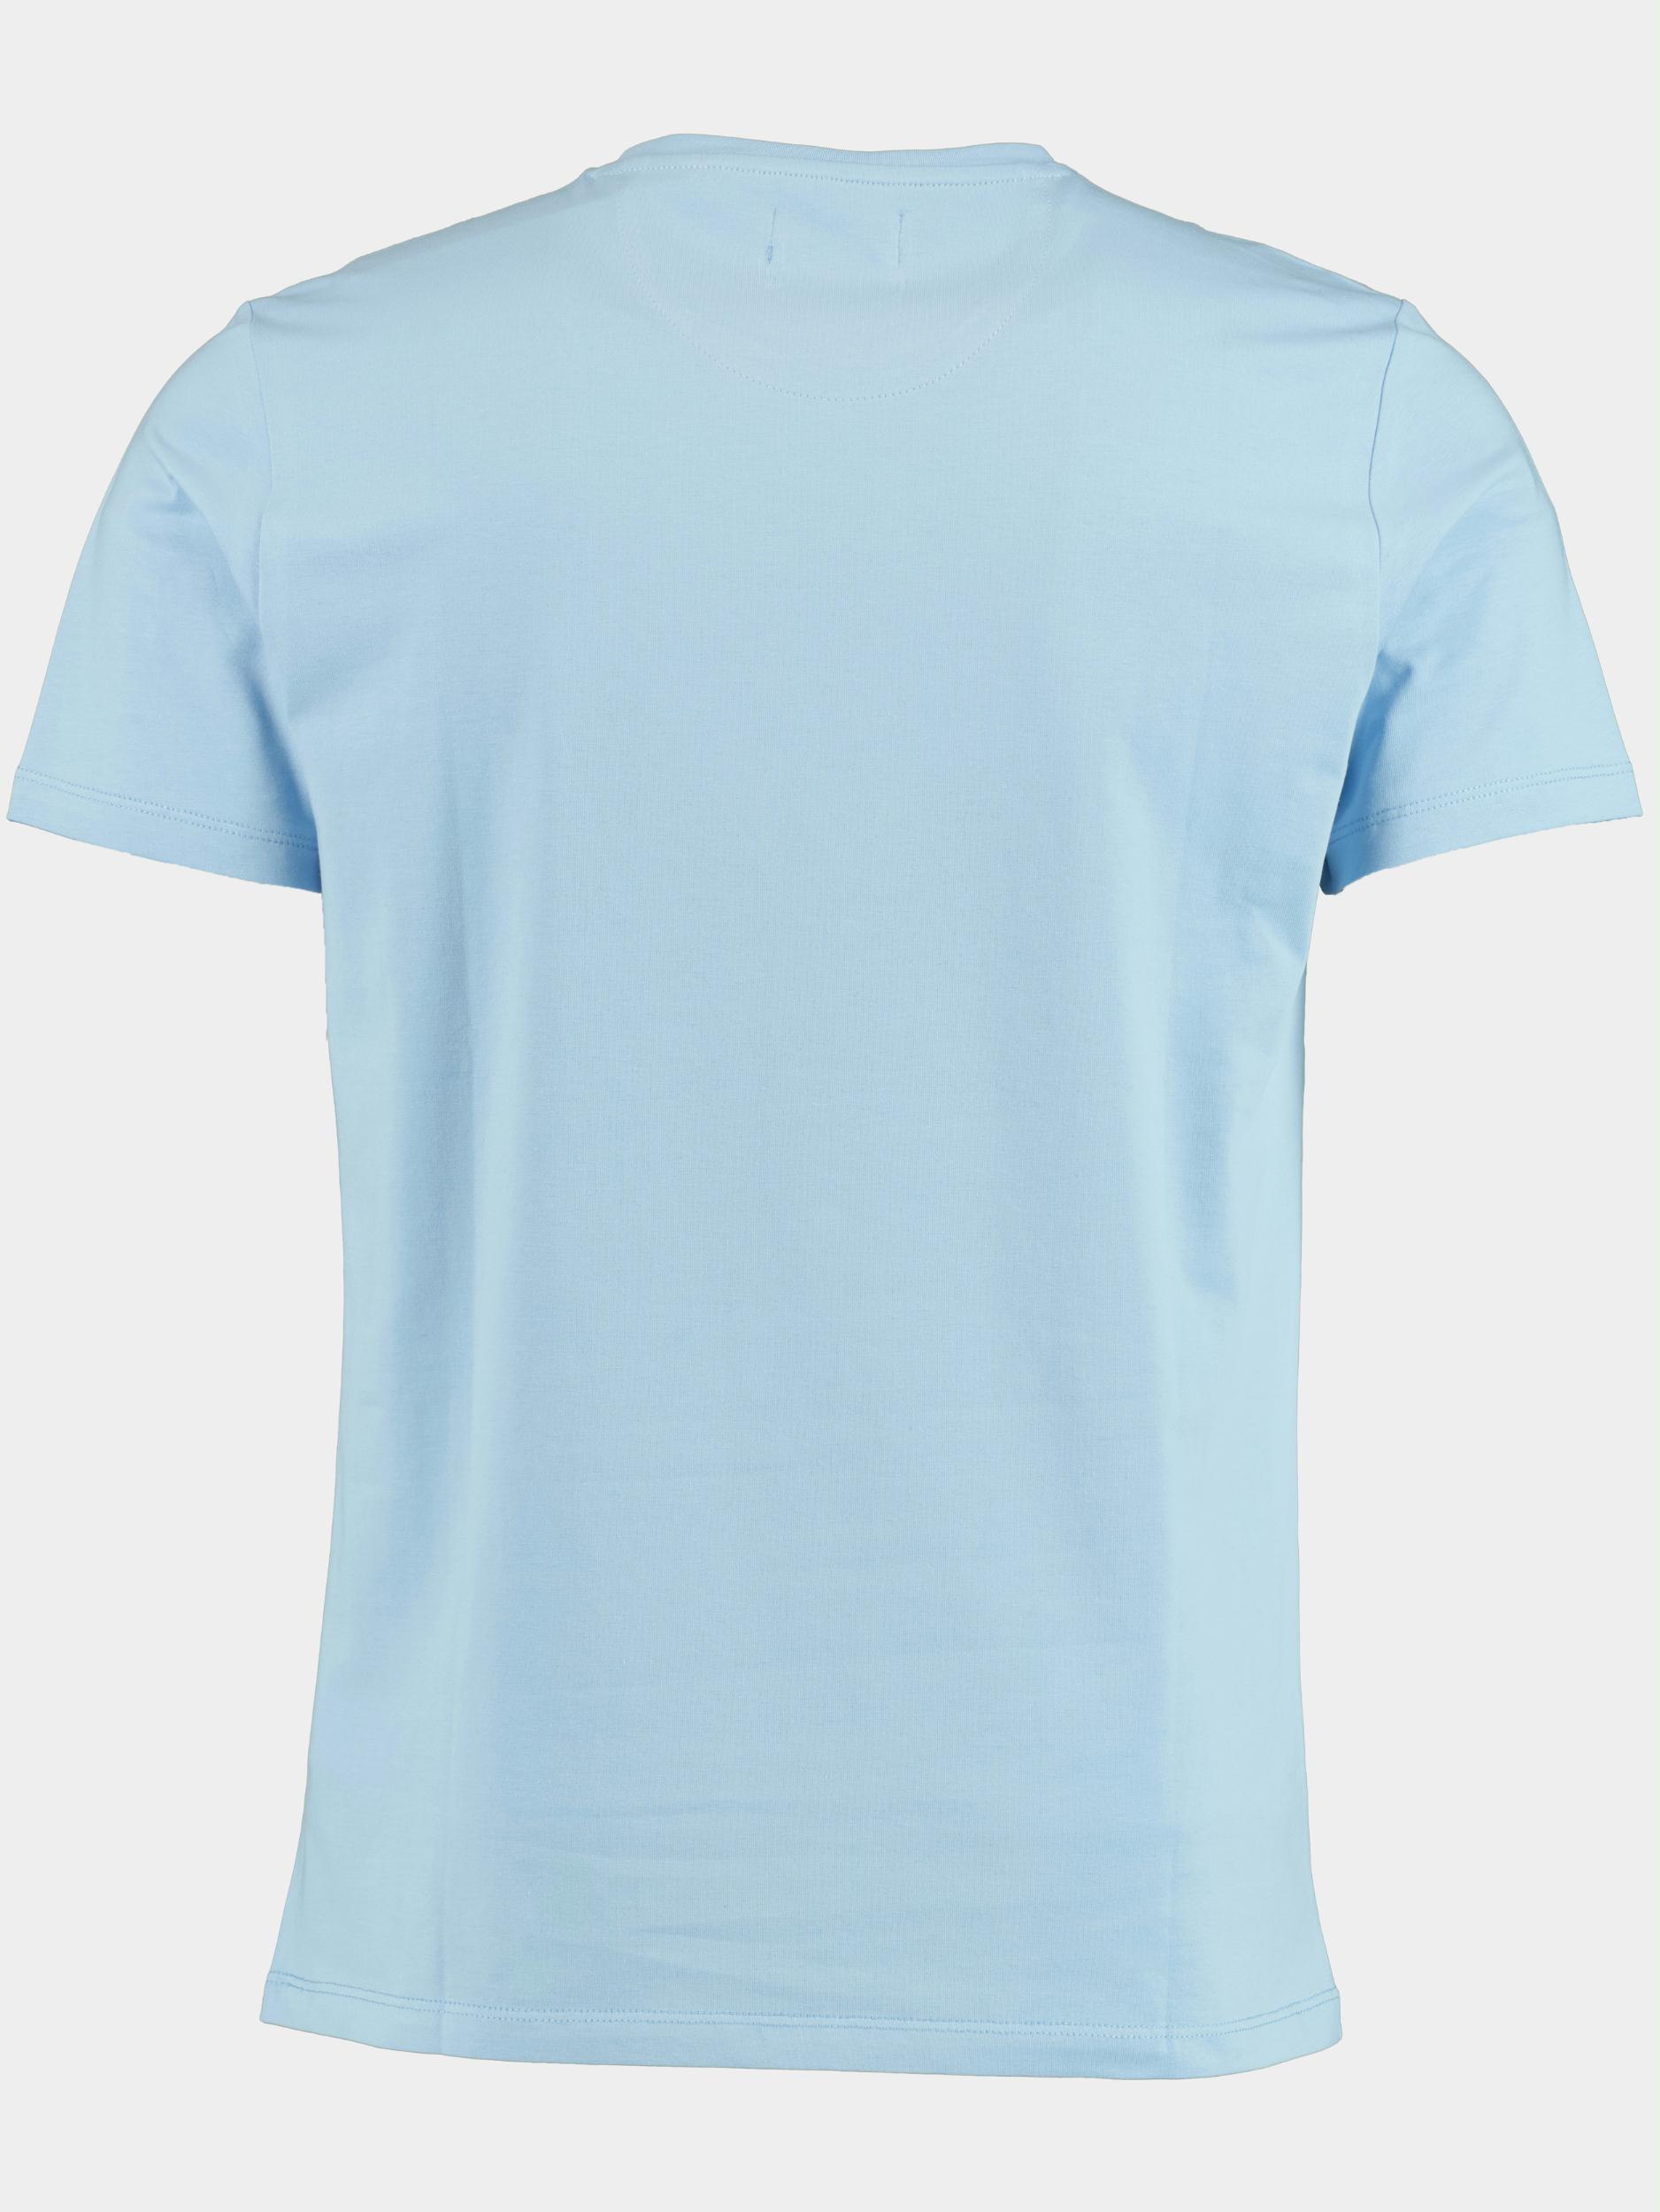 Bos Bright Blue T-shirt korte mouw Blauw  35790/06-Mavi